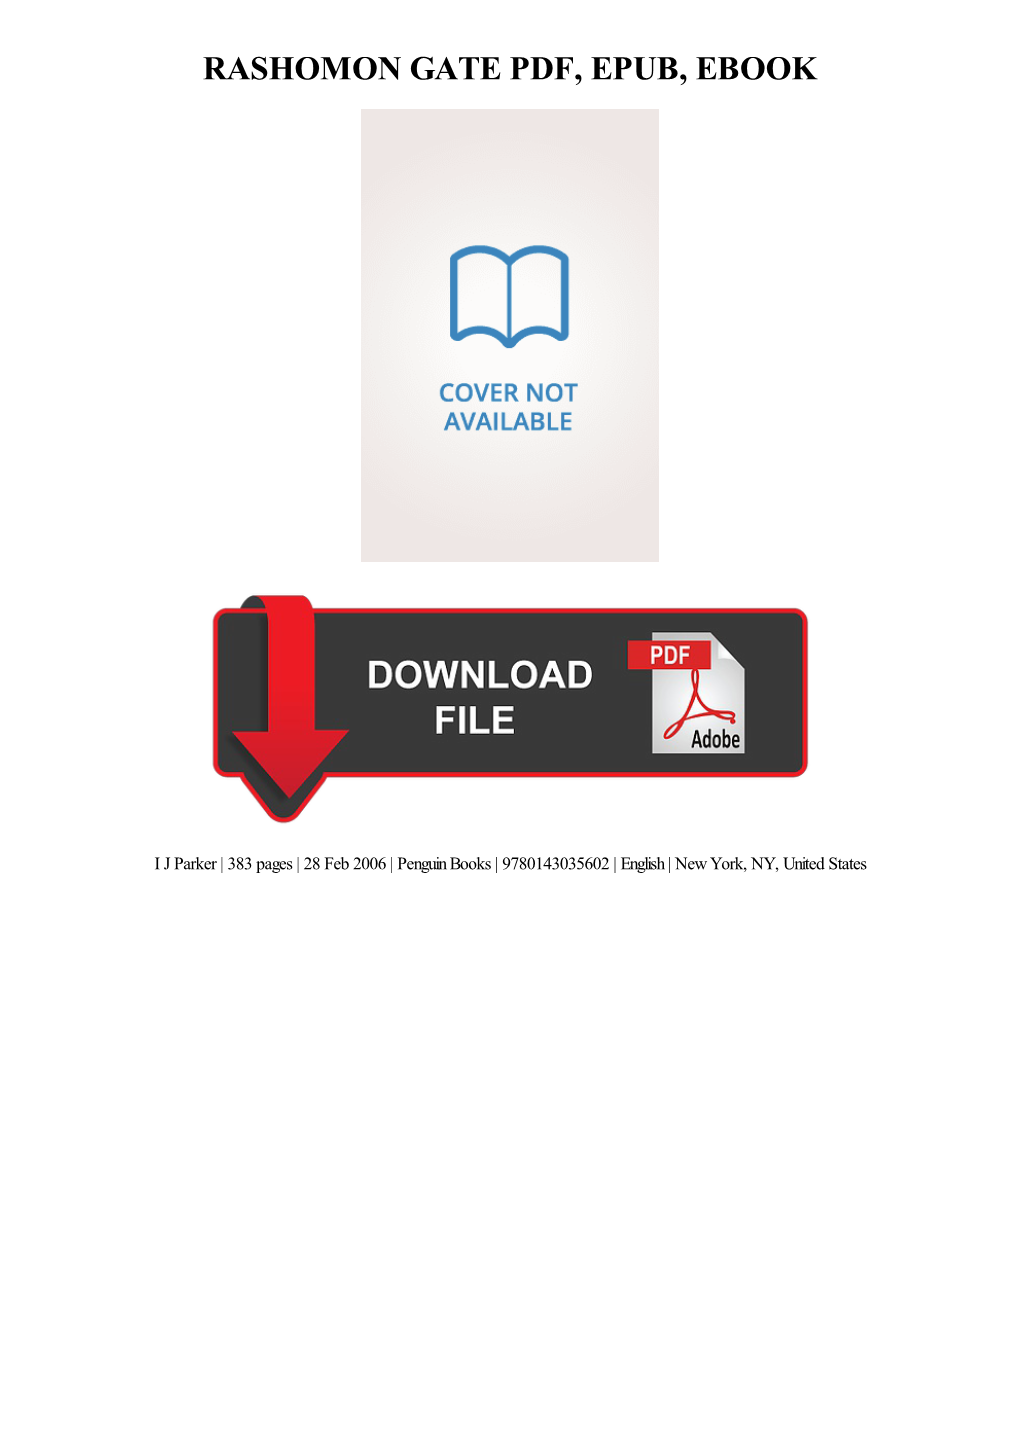 Rashomon Gate PDF Book